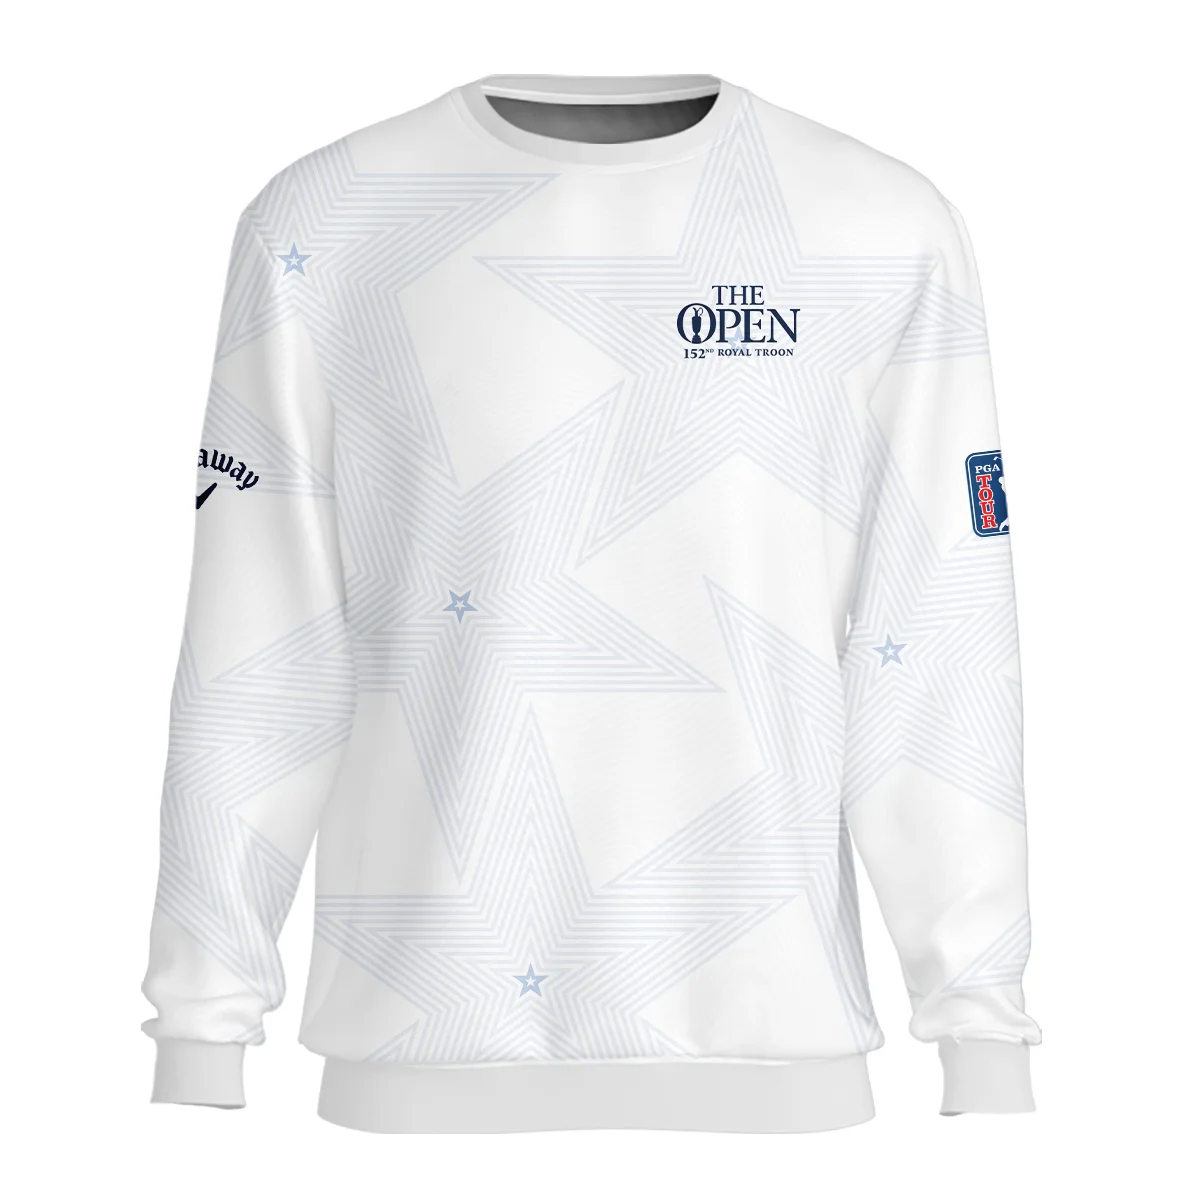 152nd The Open Championship Golf Callaway Unisex T-Shirt Stars White Navy Golf Sports All Over Print T-Shirt